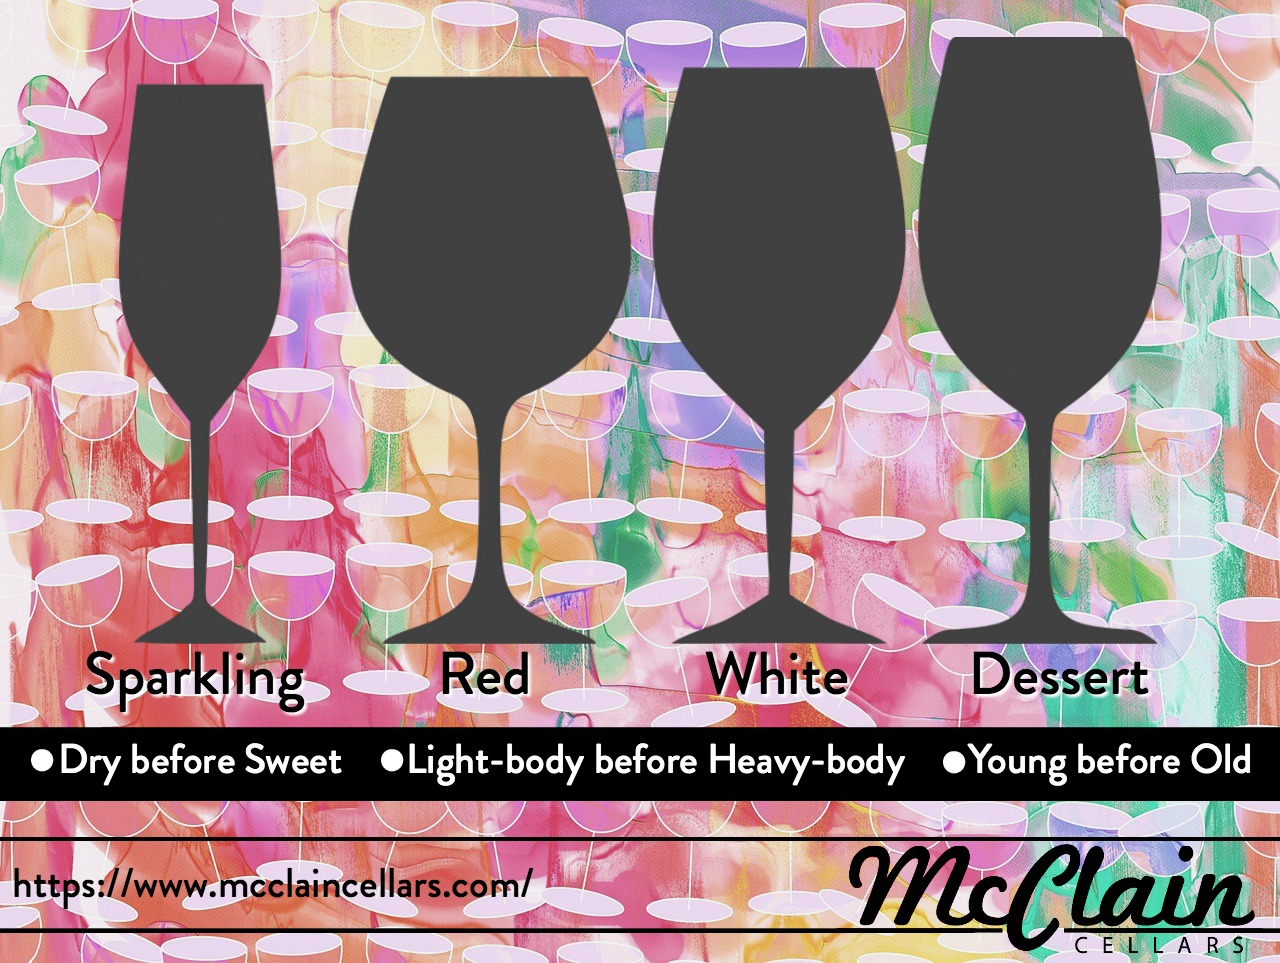 wine glass types